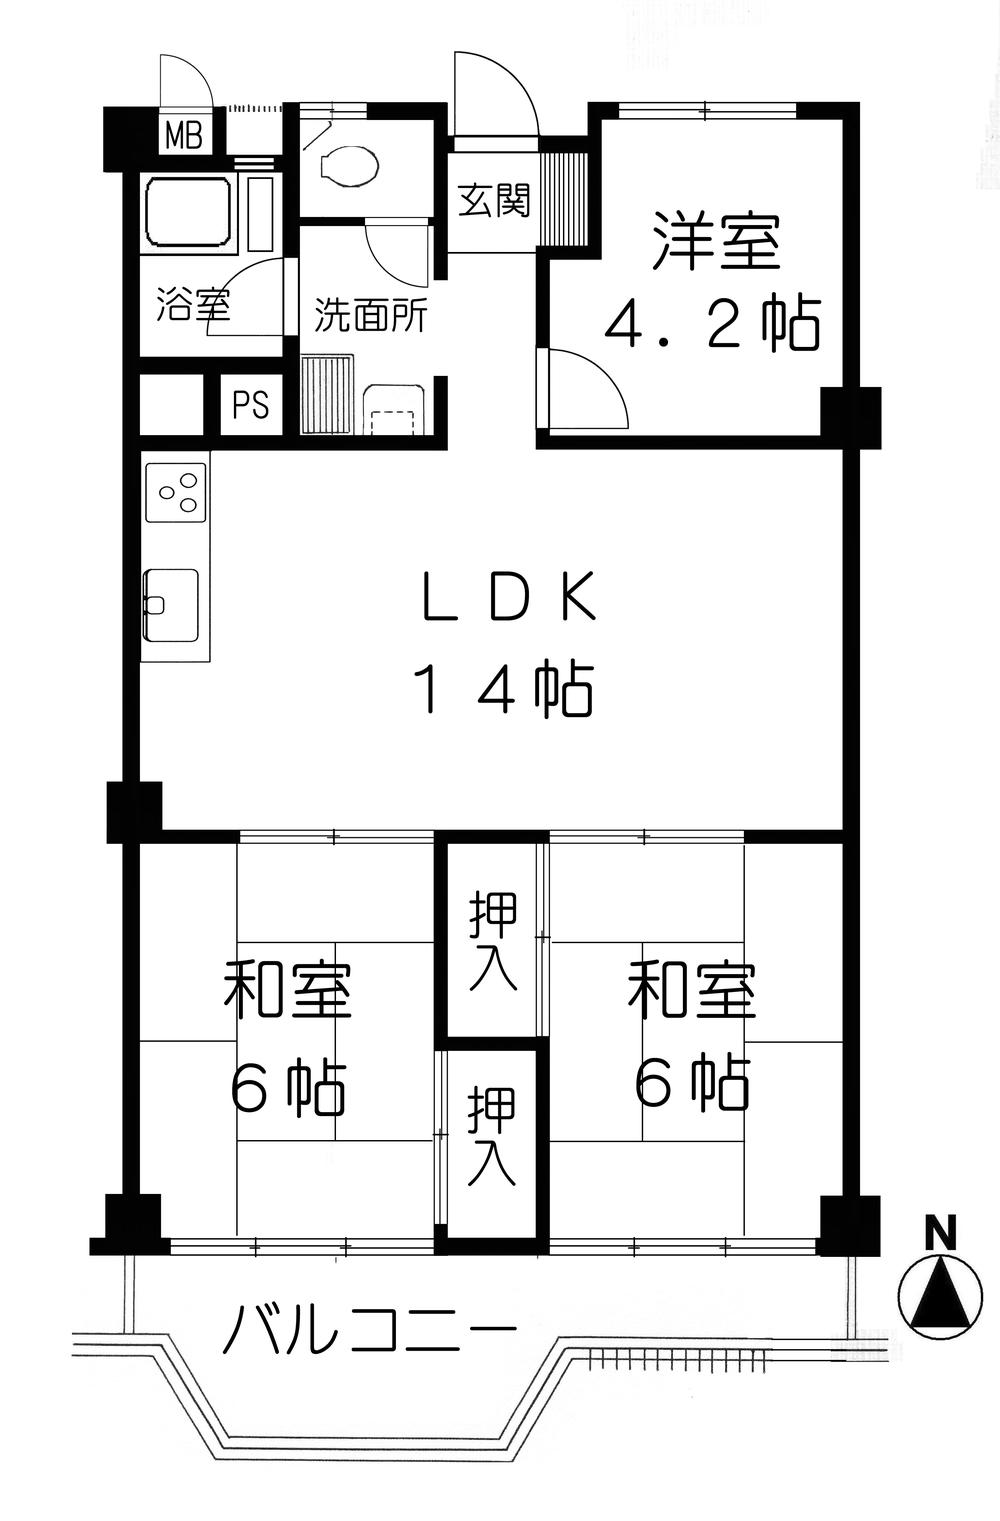 Floor plan. 3LDK, Price 11.6 million yen, Footprint 66 sq m , Balcony area 8.37 sq m